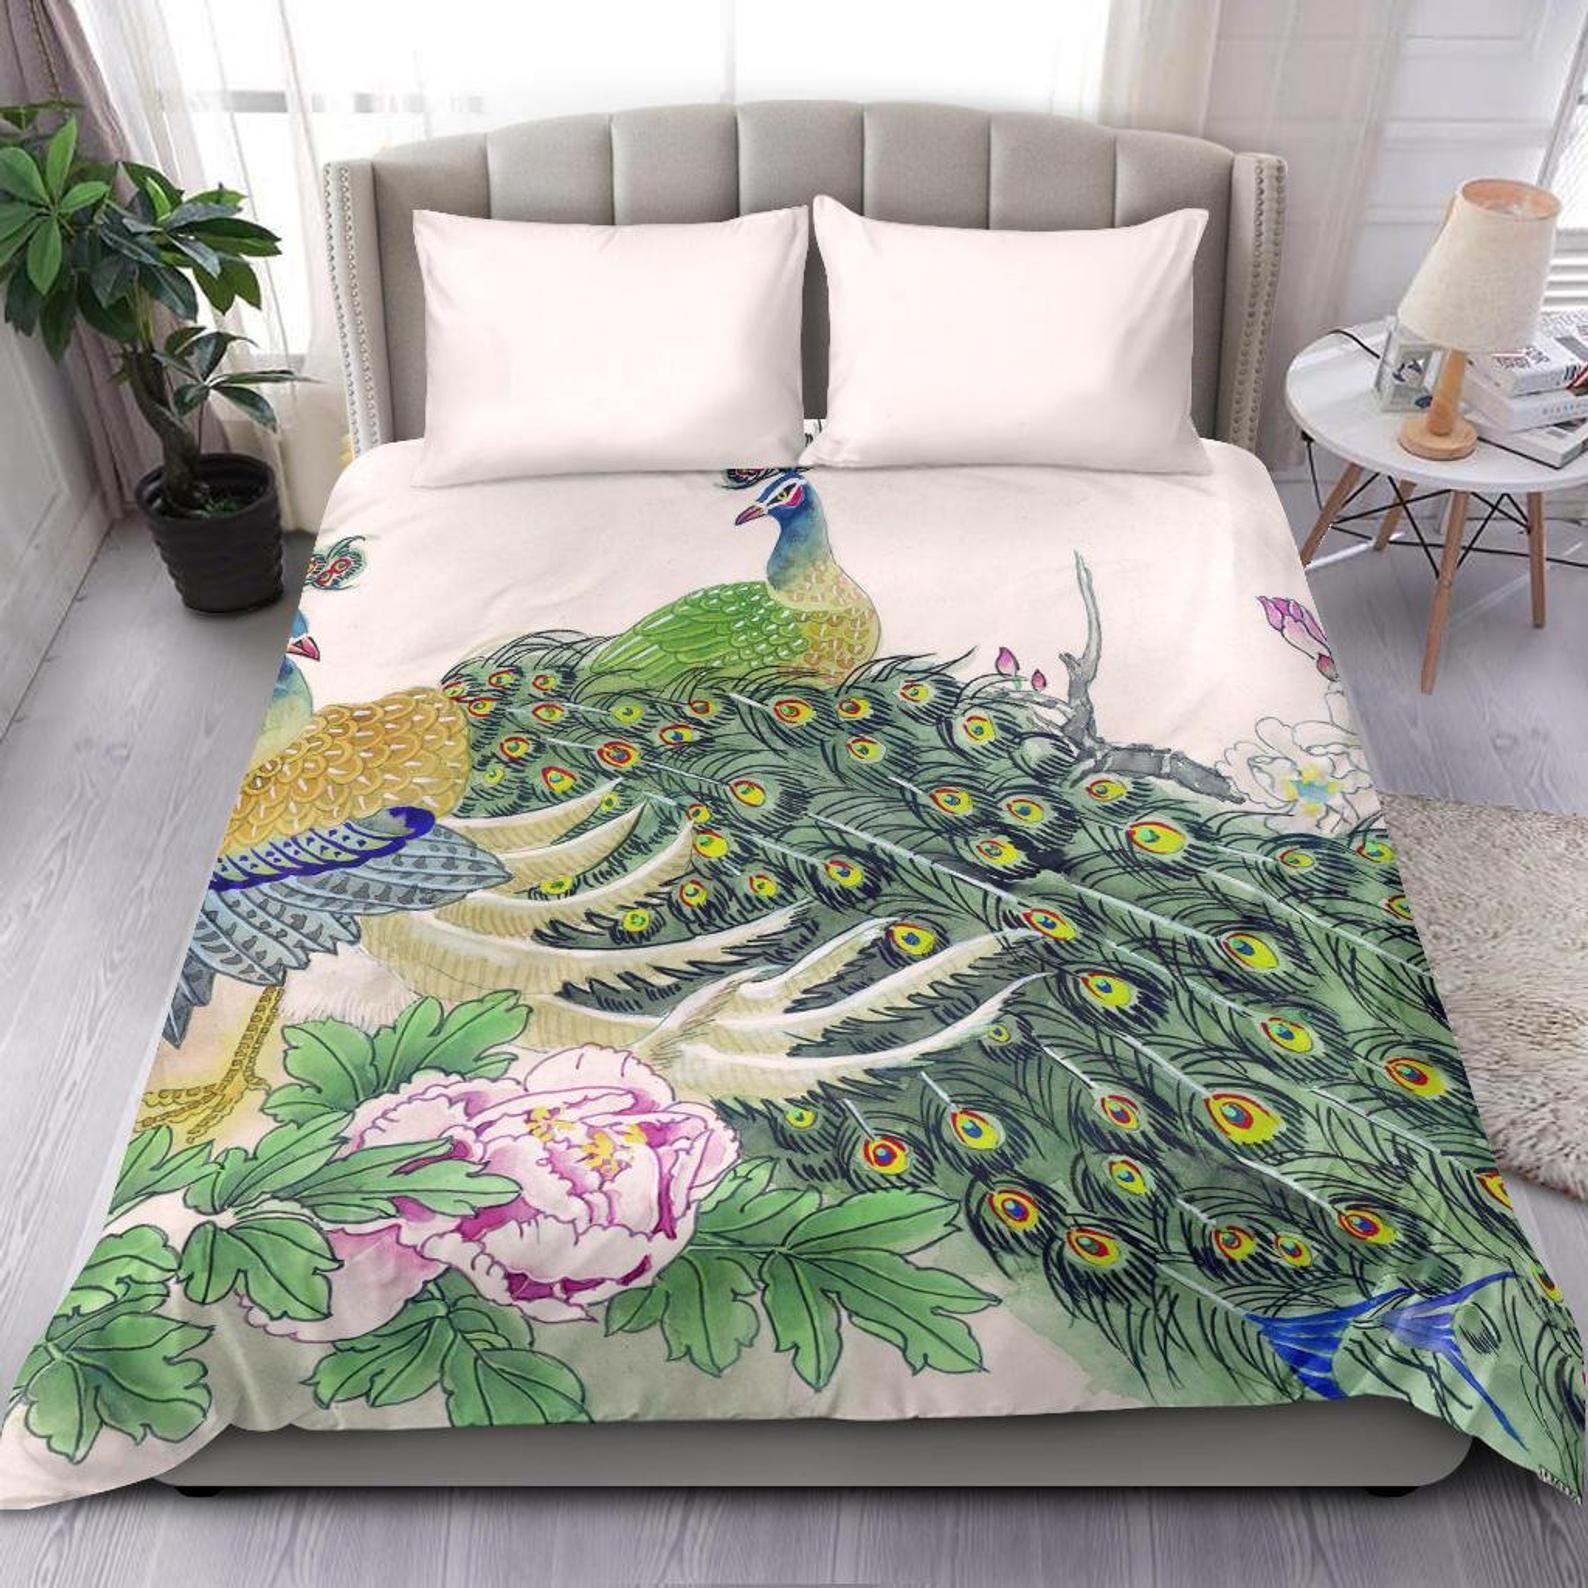 Peacock Bedding Set  Bed Sheets Spread Comforter Duvet Cover Bedding Sets